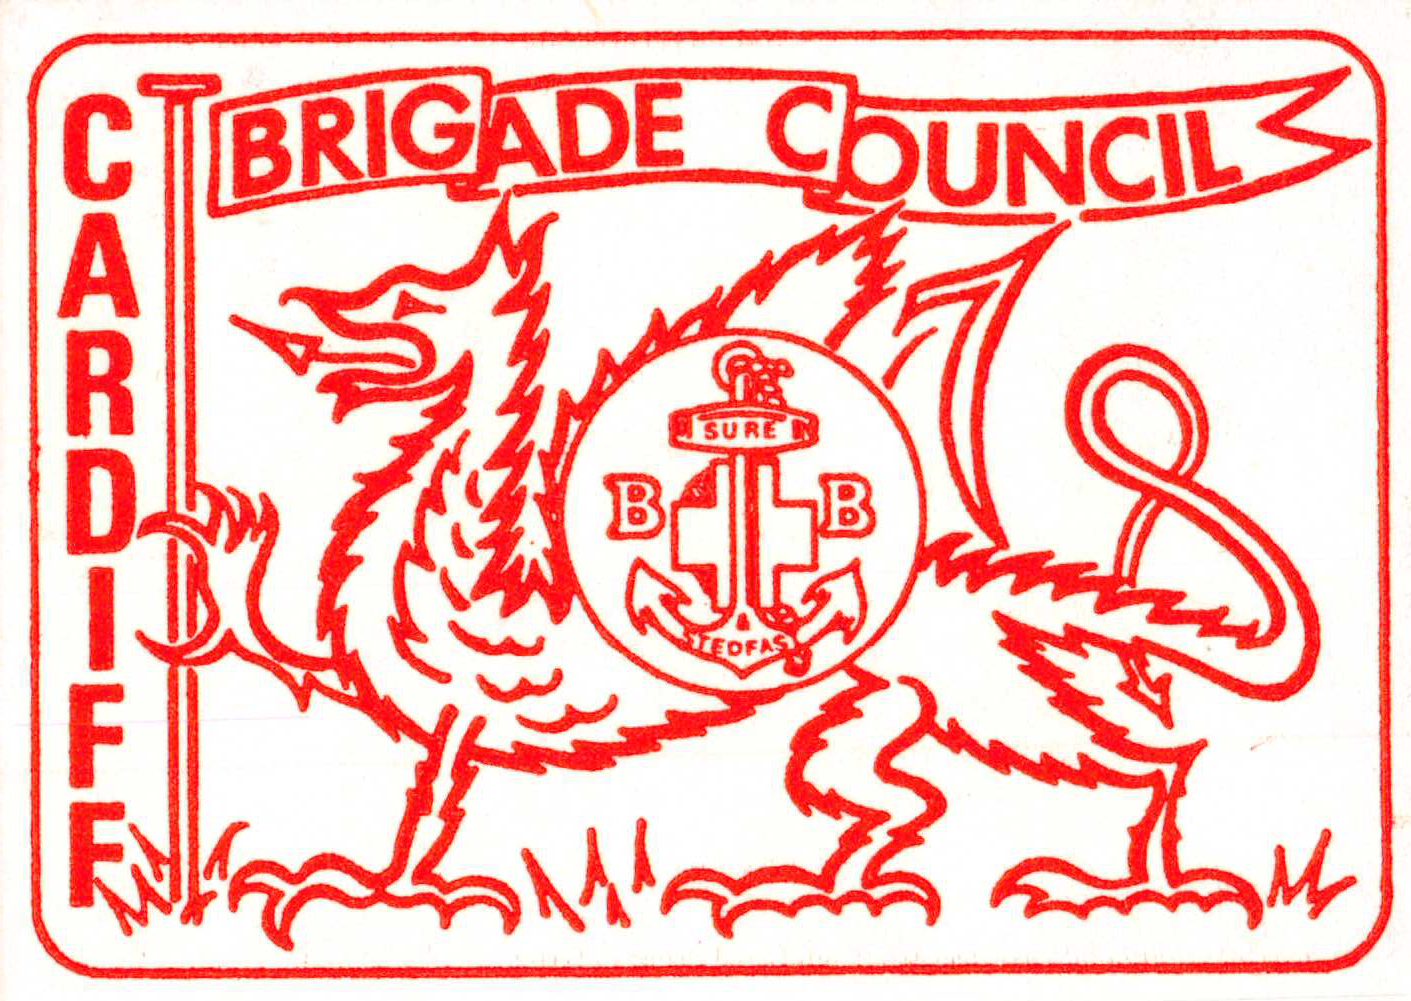 Brigade Council Cardiff